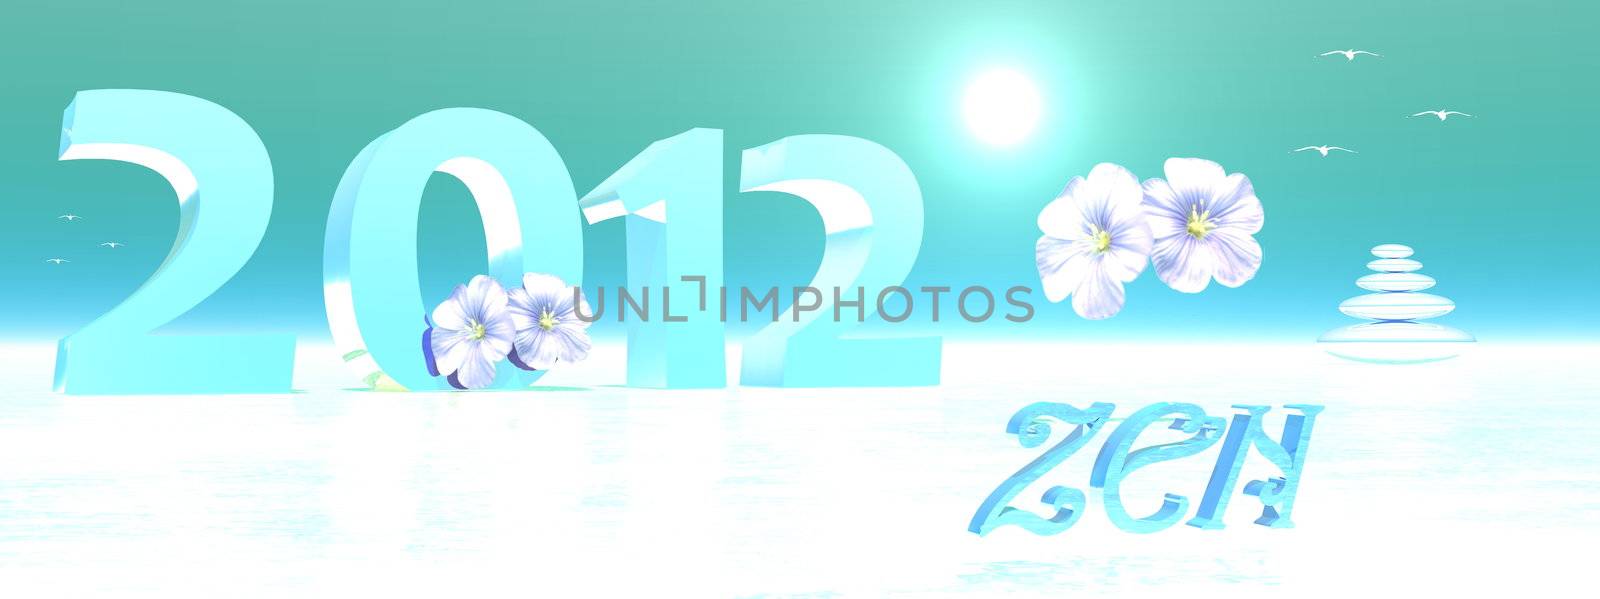 New year wish 2012 by Elenaphotos21